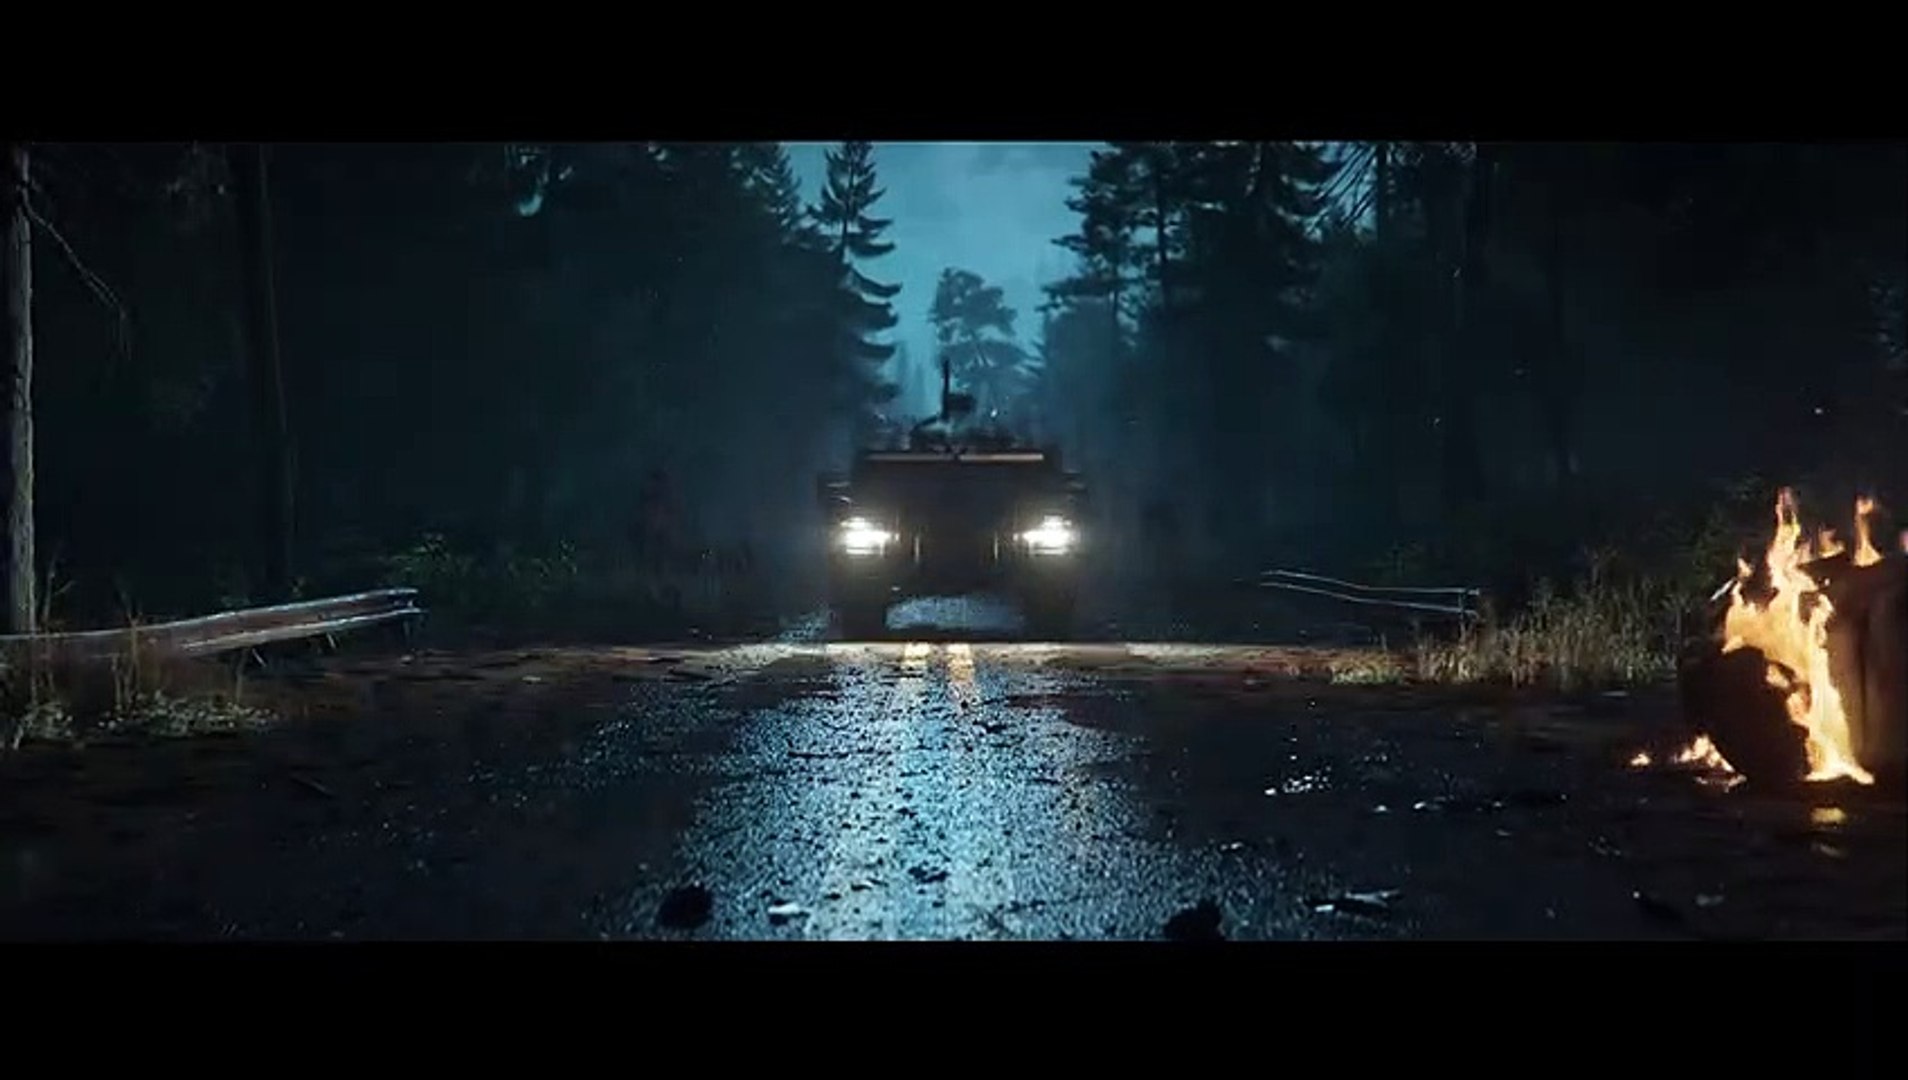 John Carpenter's: Toxic Commando  Official Reveal Trailer - Summer Game  Fest 2023 - video Dailymotion